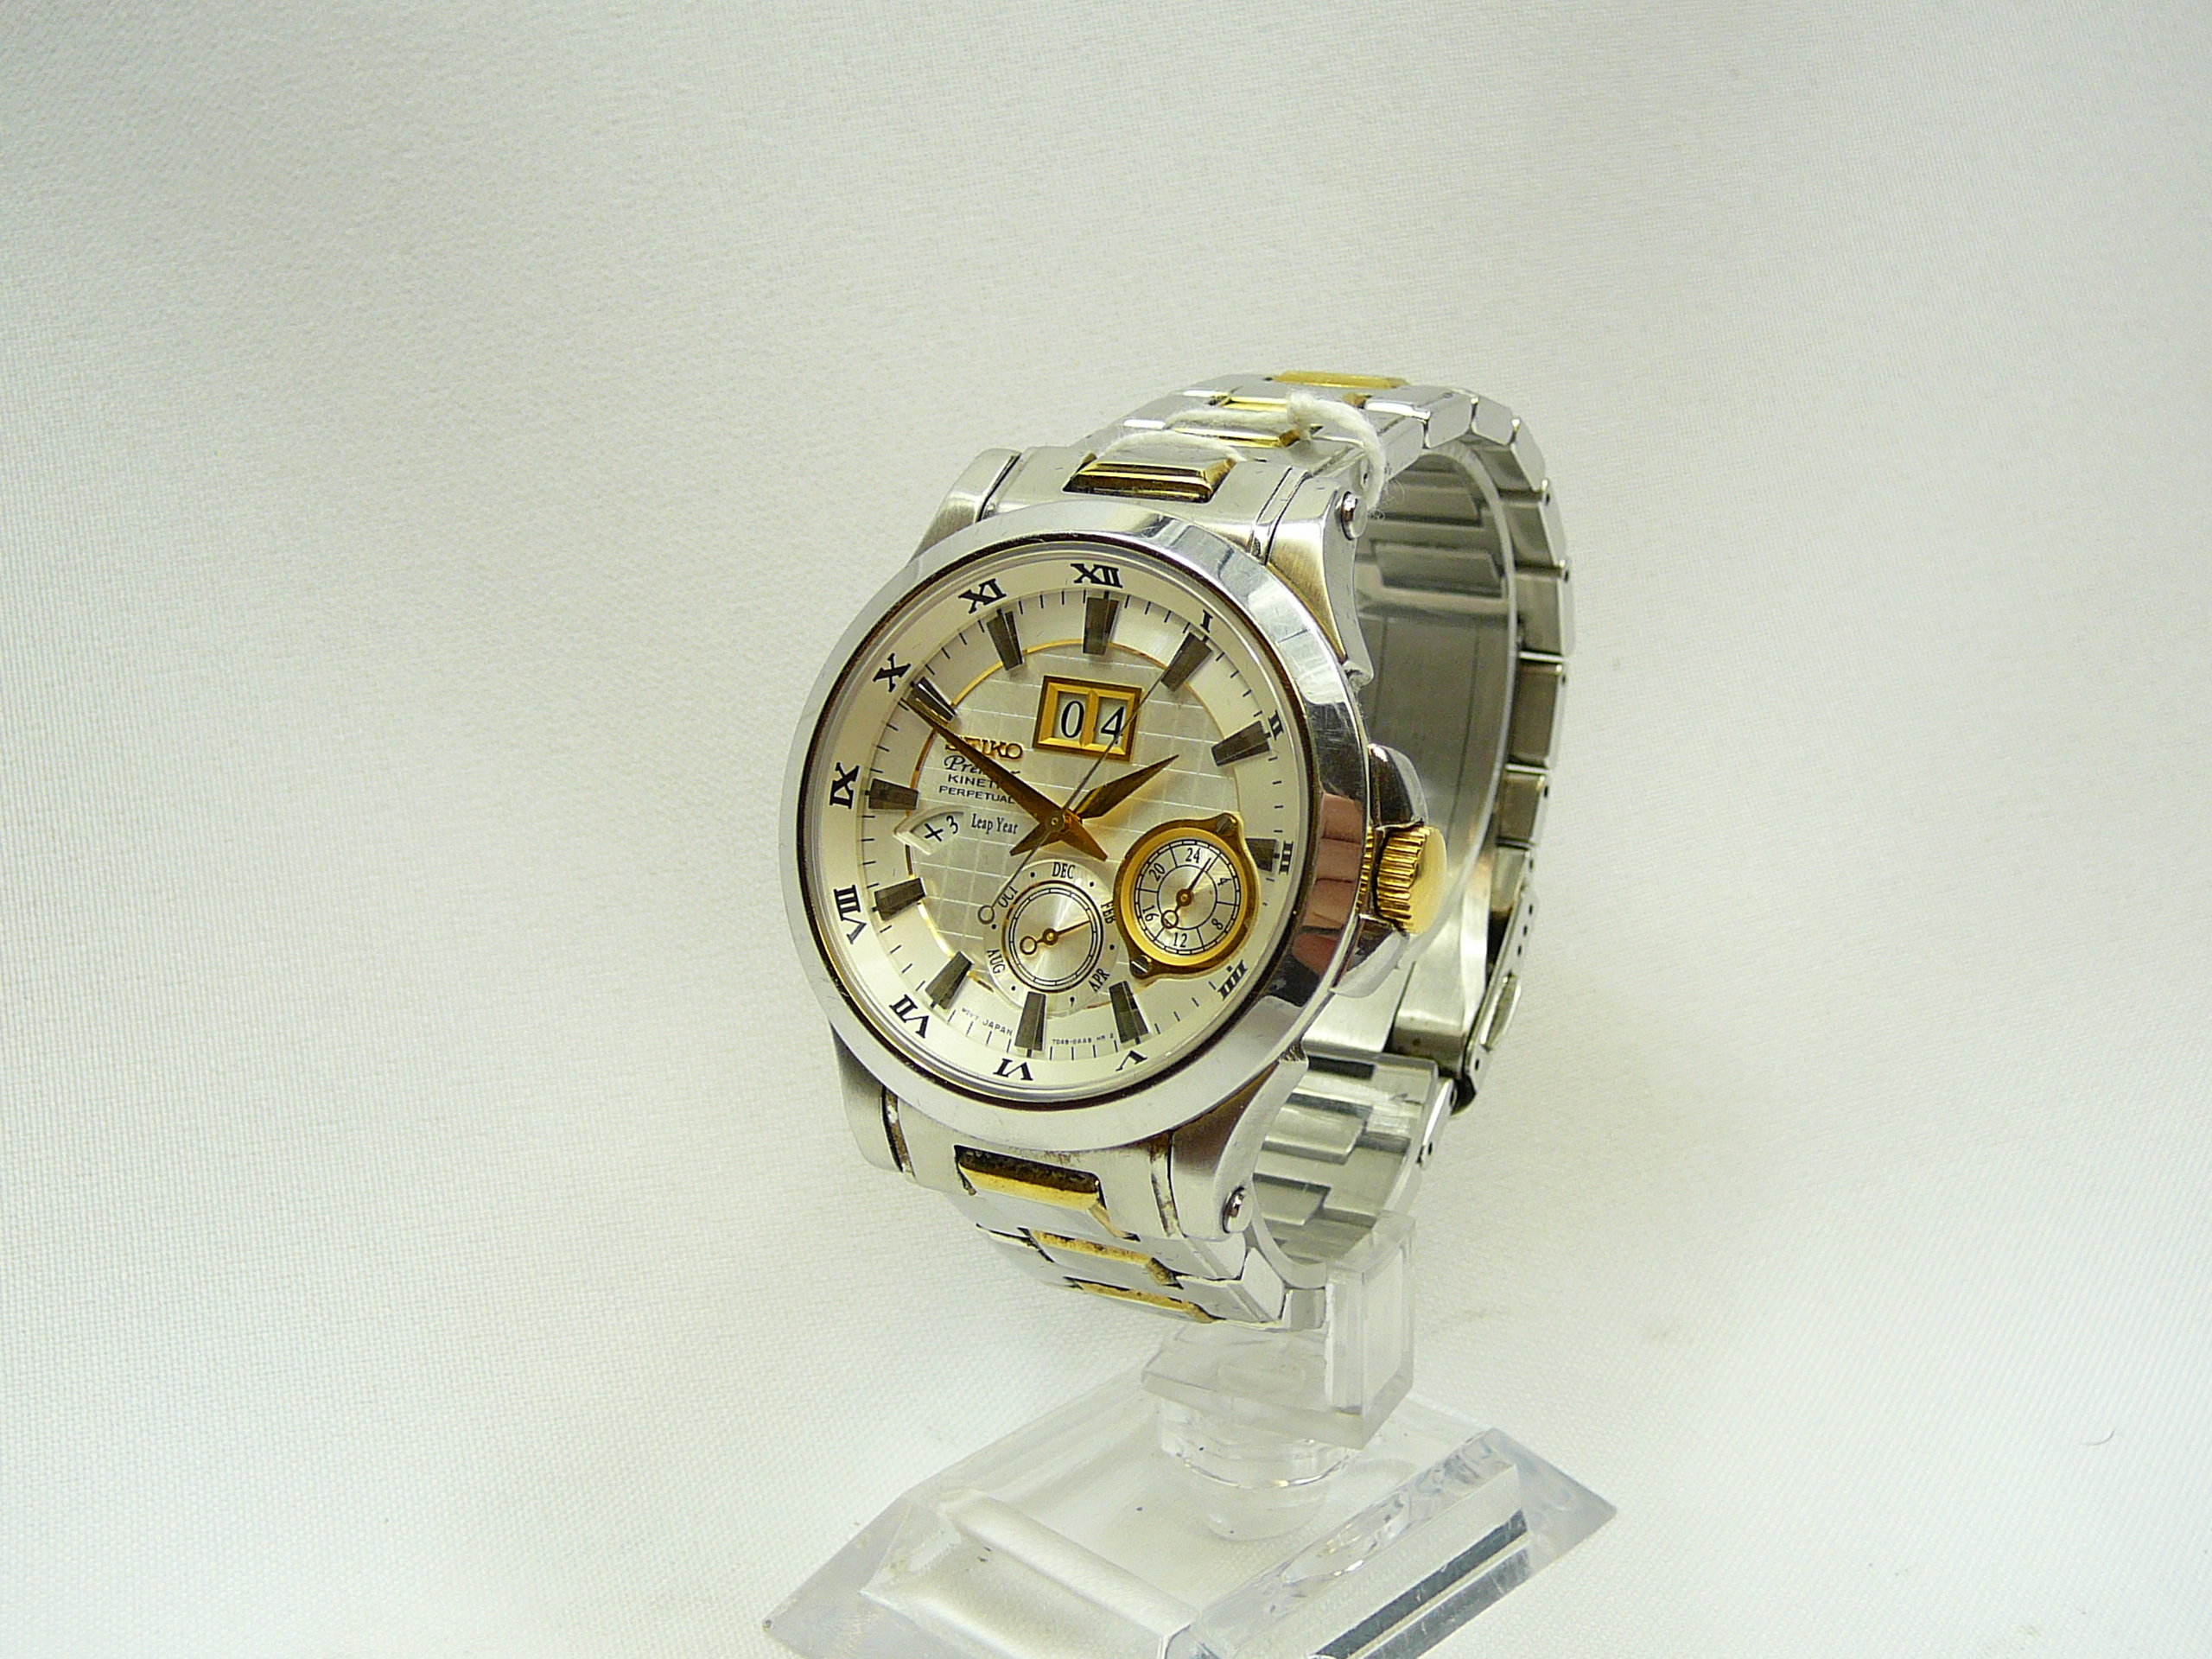 Gents Seiko chronograph wristwatch - Image 2 of 3